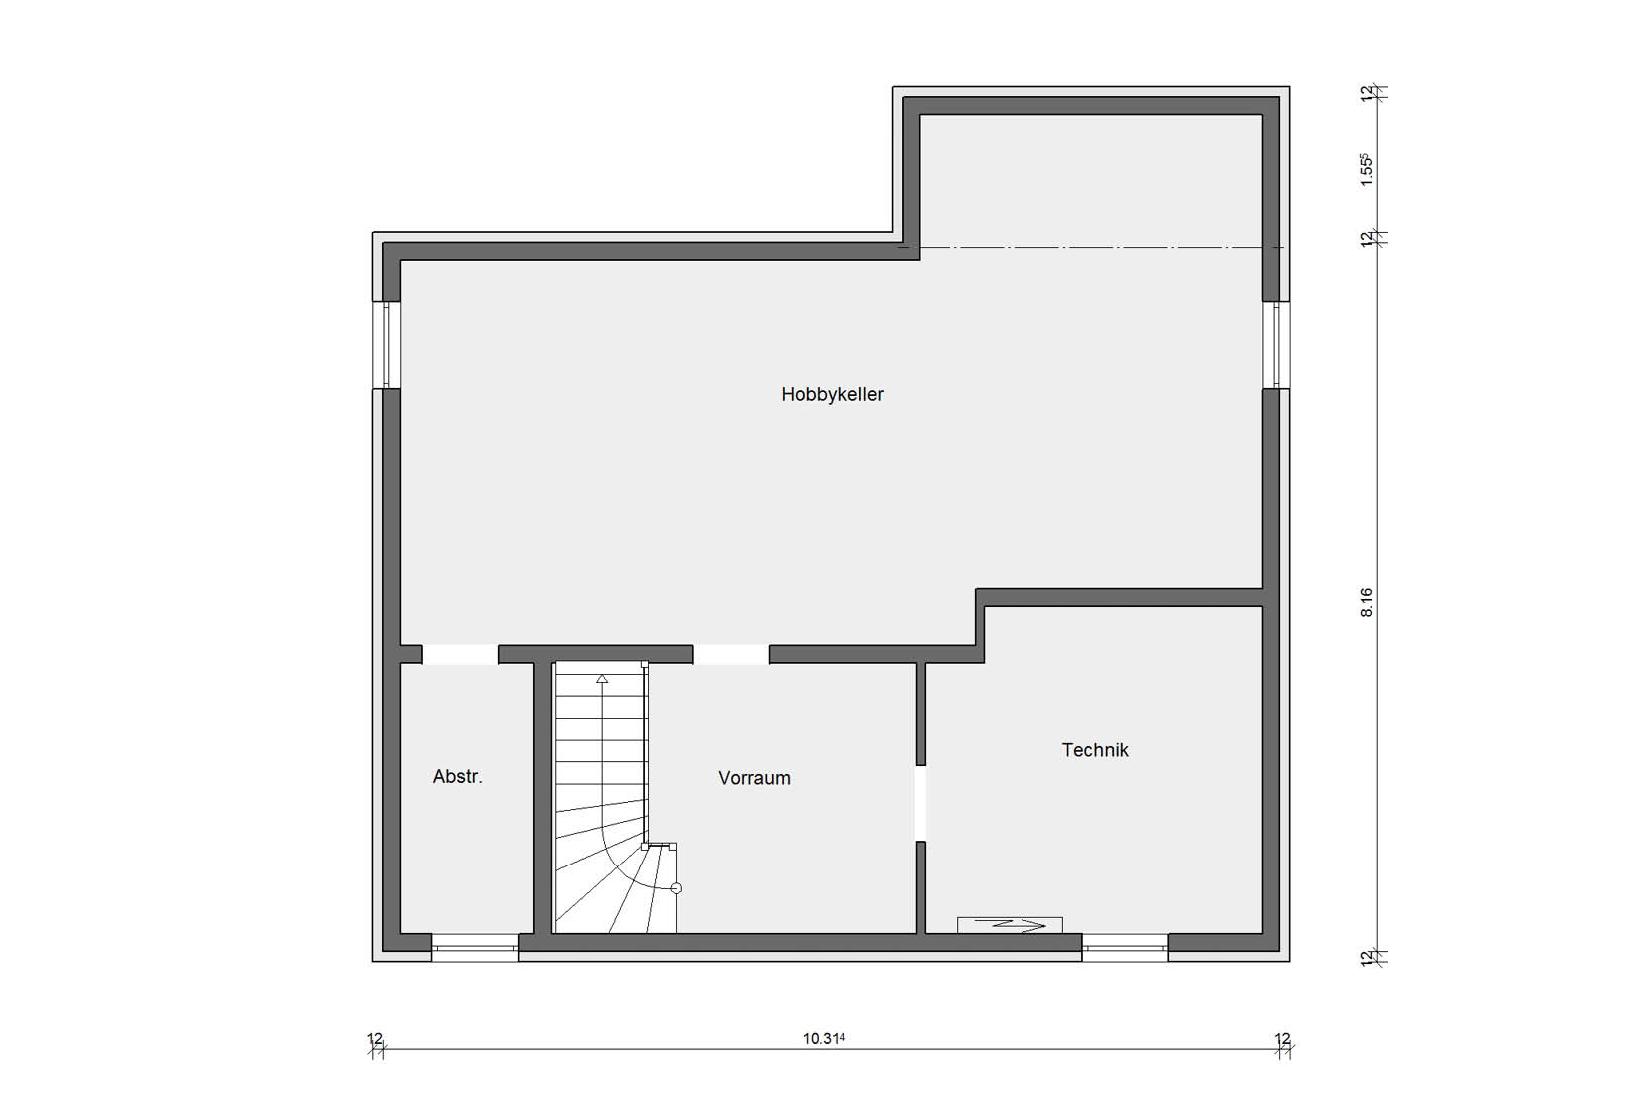 Basement floor plan Prefabricated house with wooden facade E 20-159.1